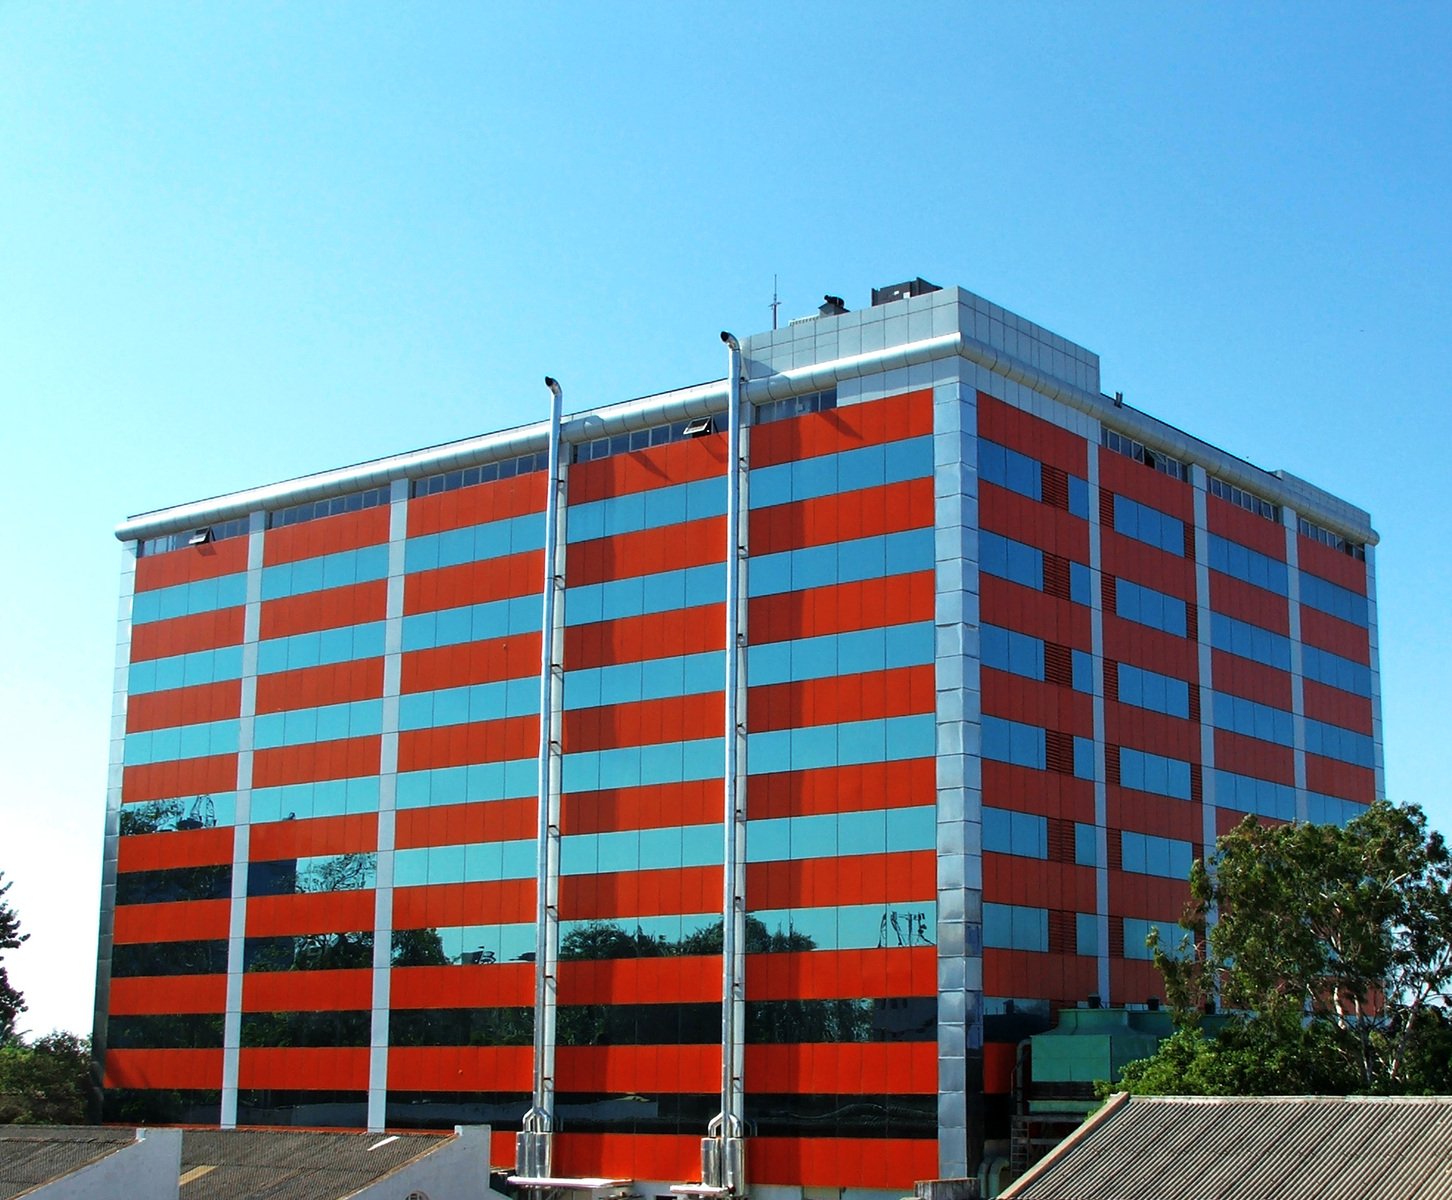 this orange and black building has three levels